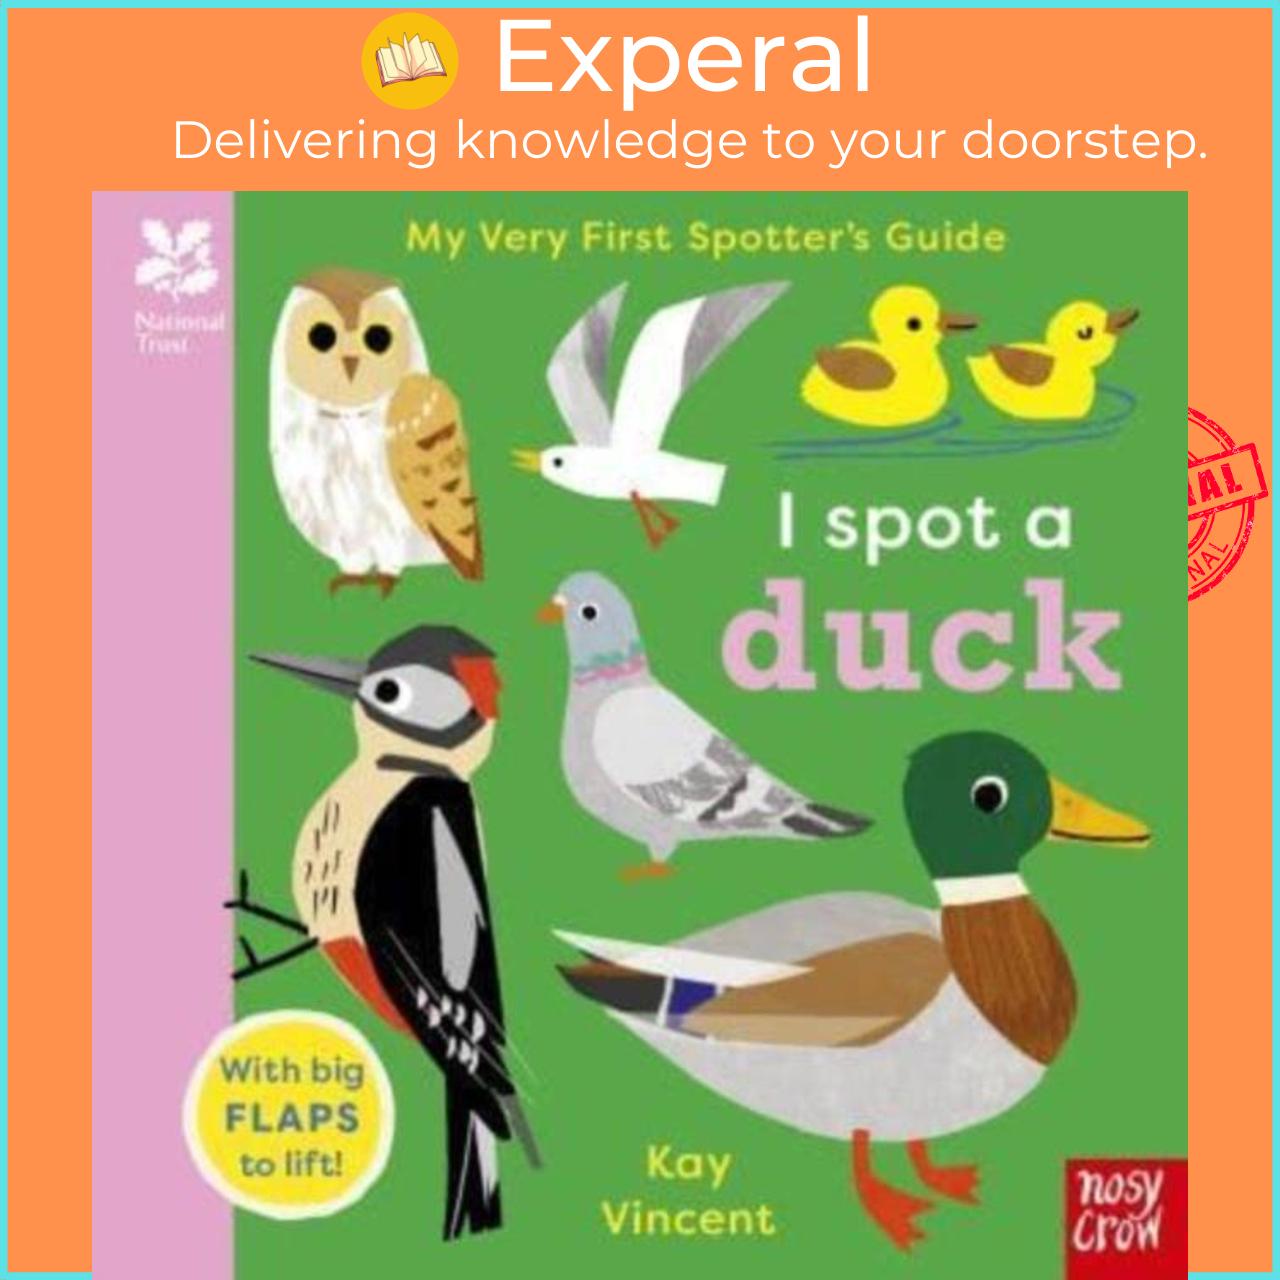 Hình ảnh Sách - National Trust: My Very First Spotter's Guide: I Spot a Duck by Kay Vincent (UK edition, boardbook)